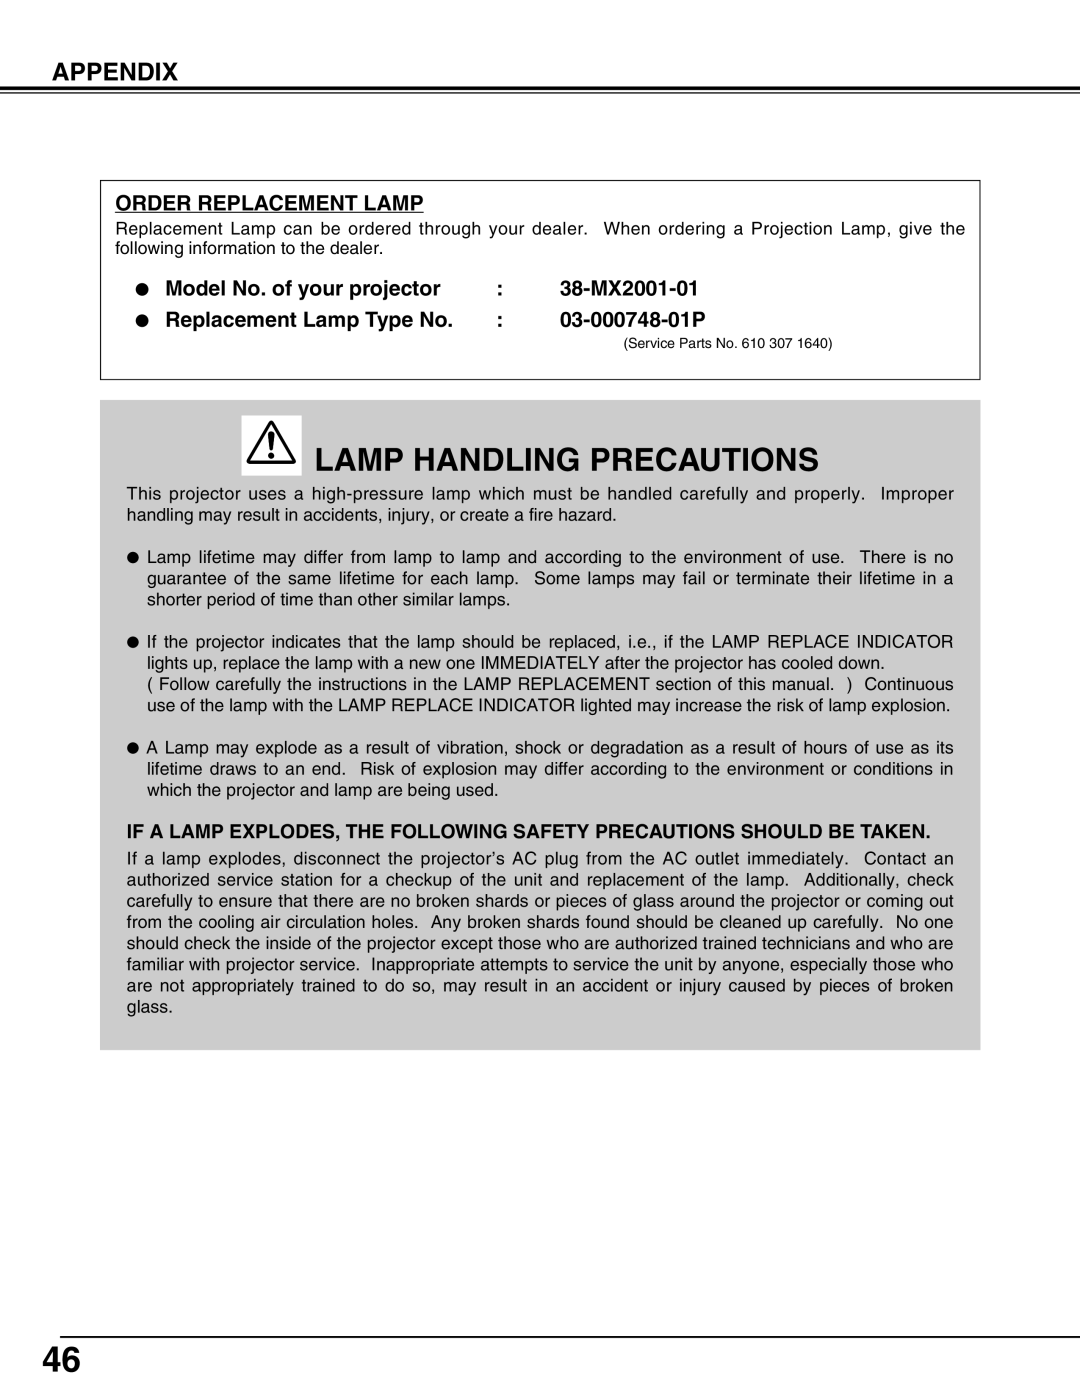 Christie Digital Systems 38-MX2001-01 Lamp Handling Precautions, Appendix, Order Replacement Lamp, 03-000748-01P 